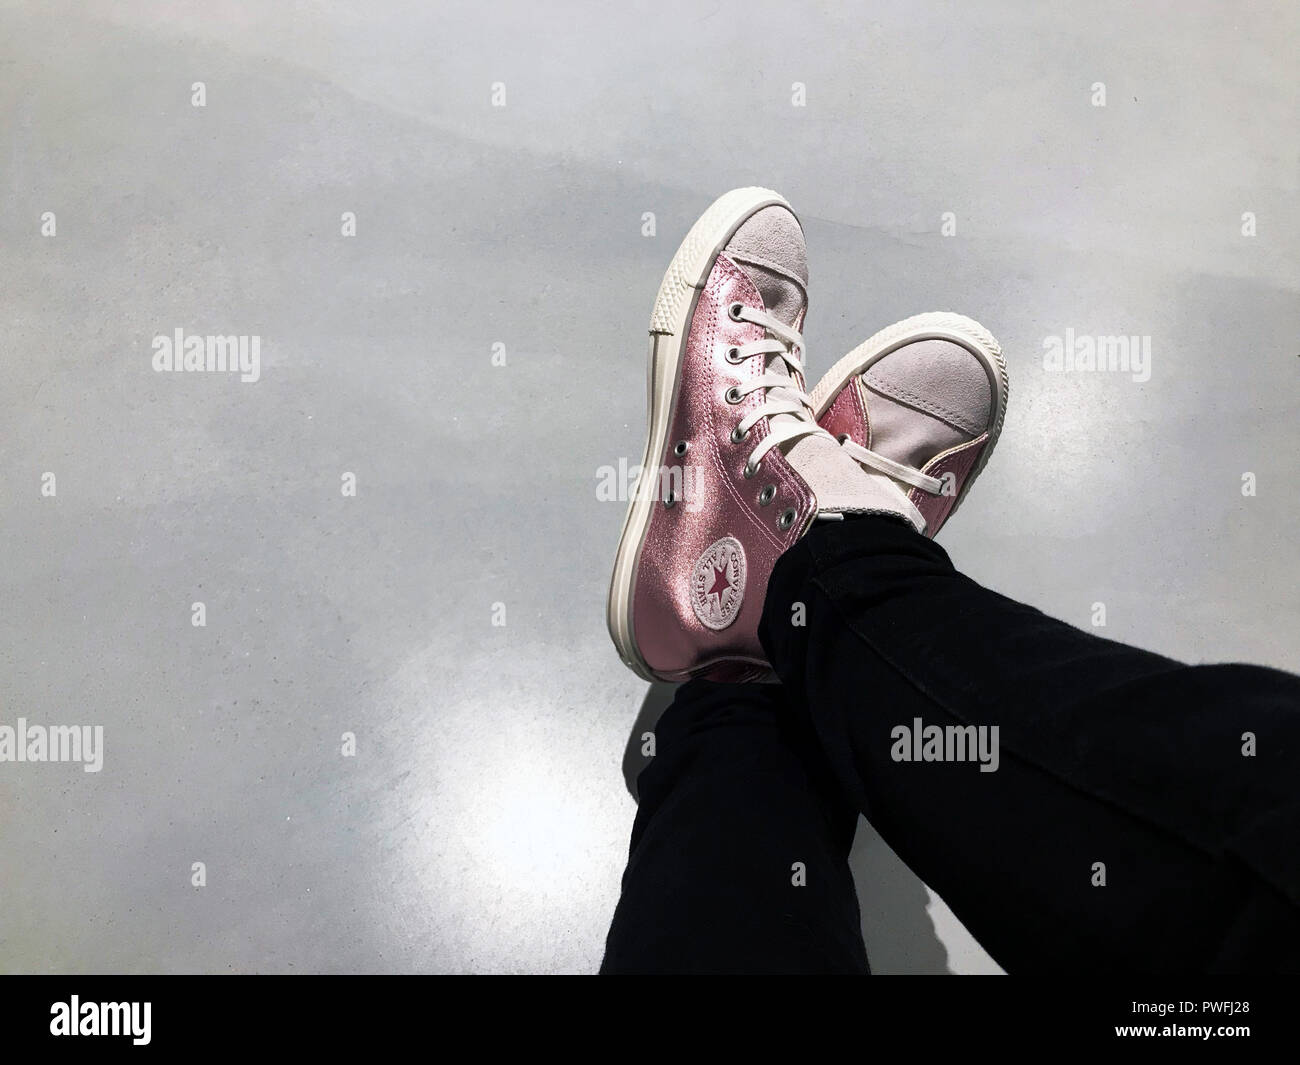 Converse sneakers/Trainer. Stockfoto